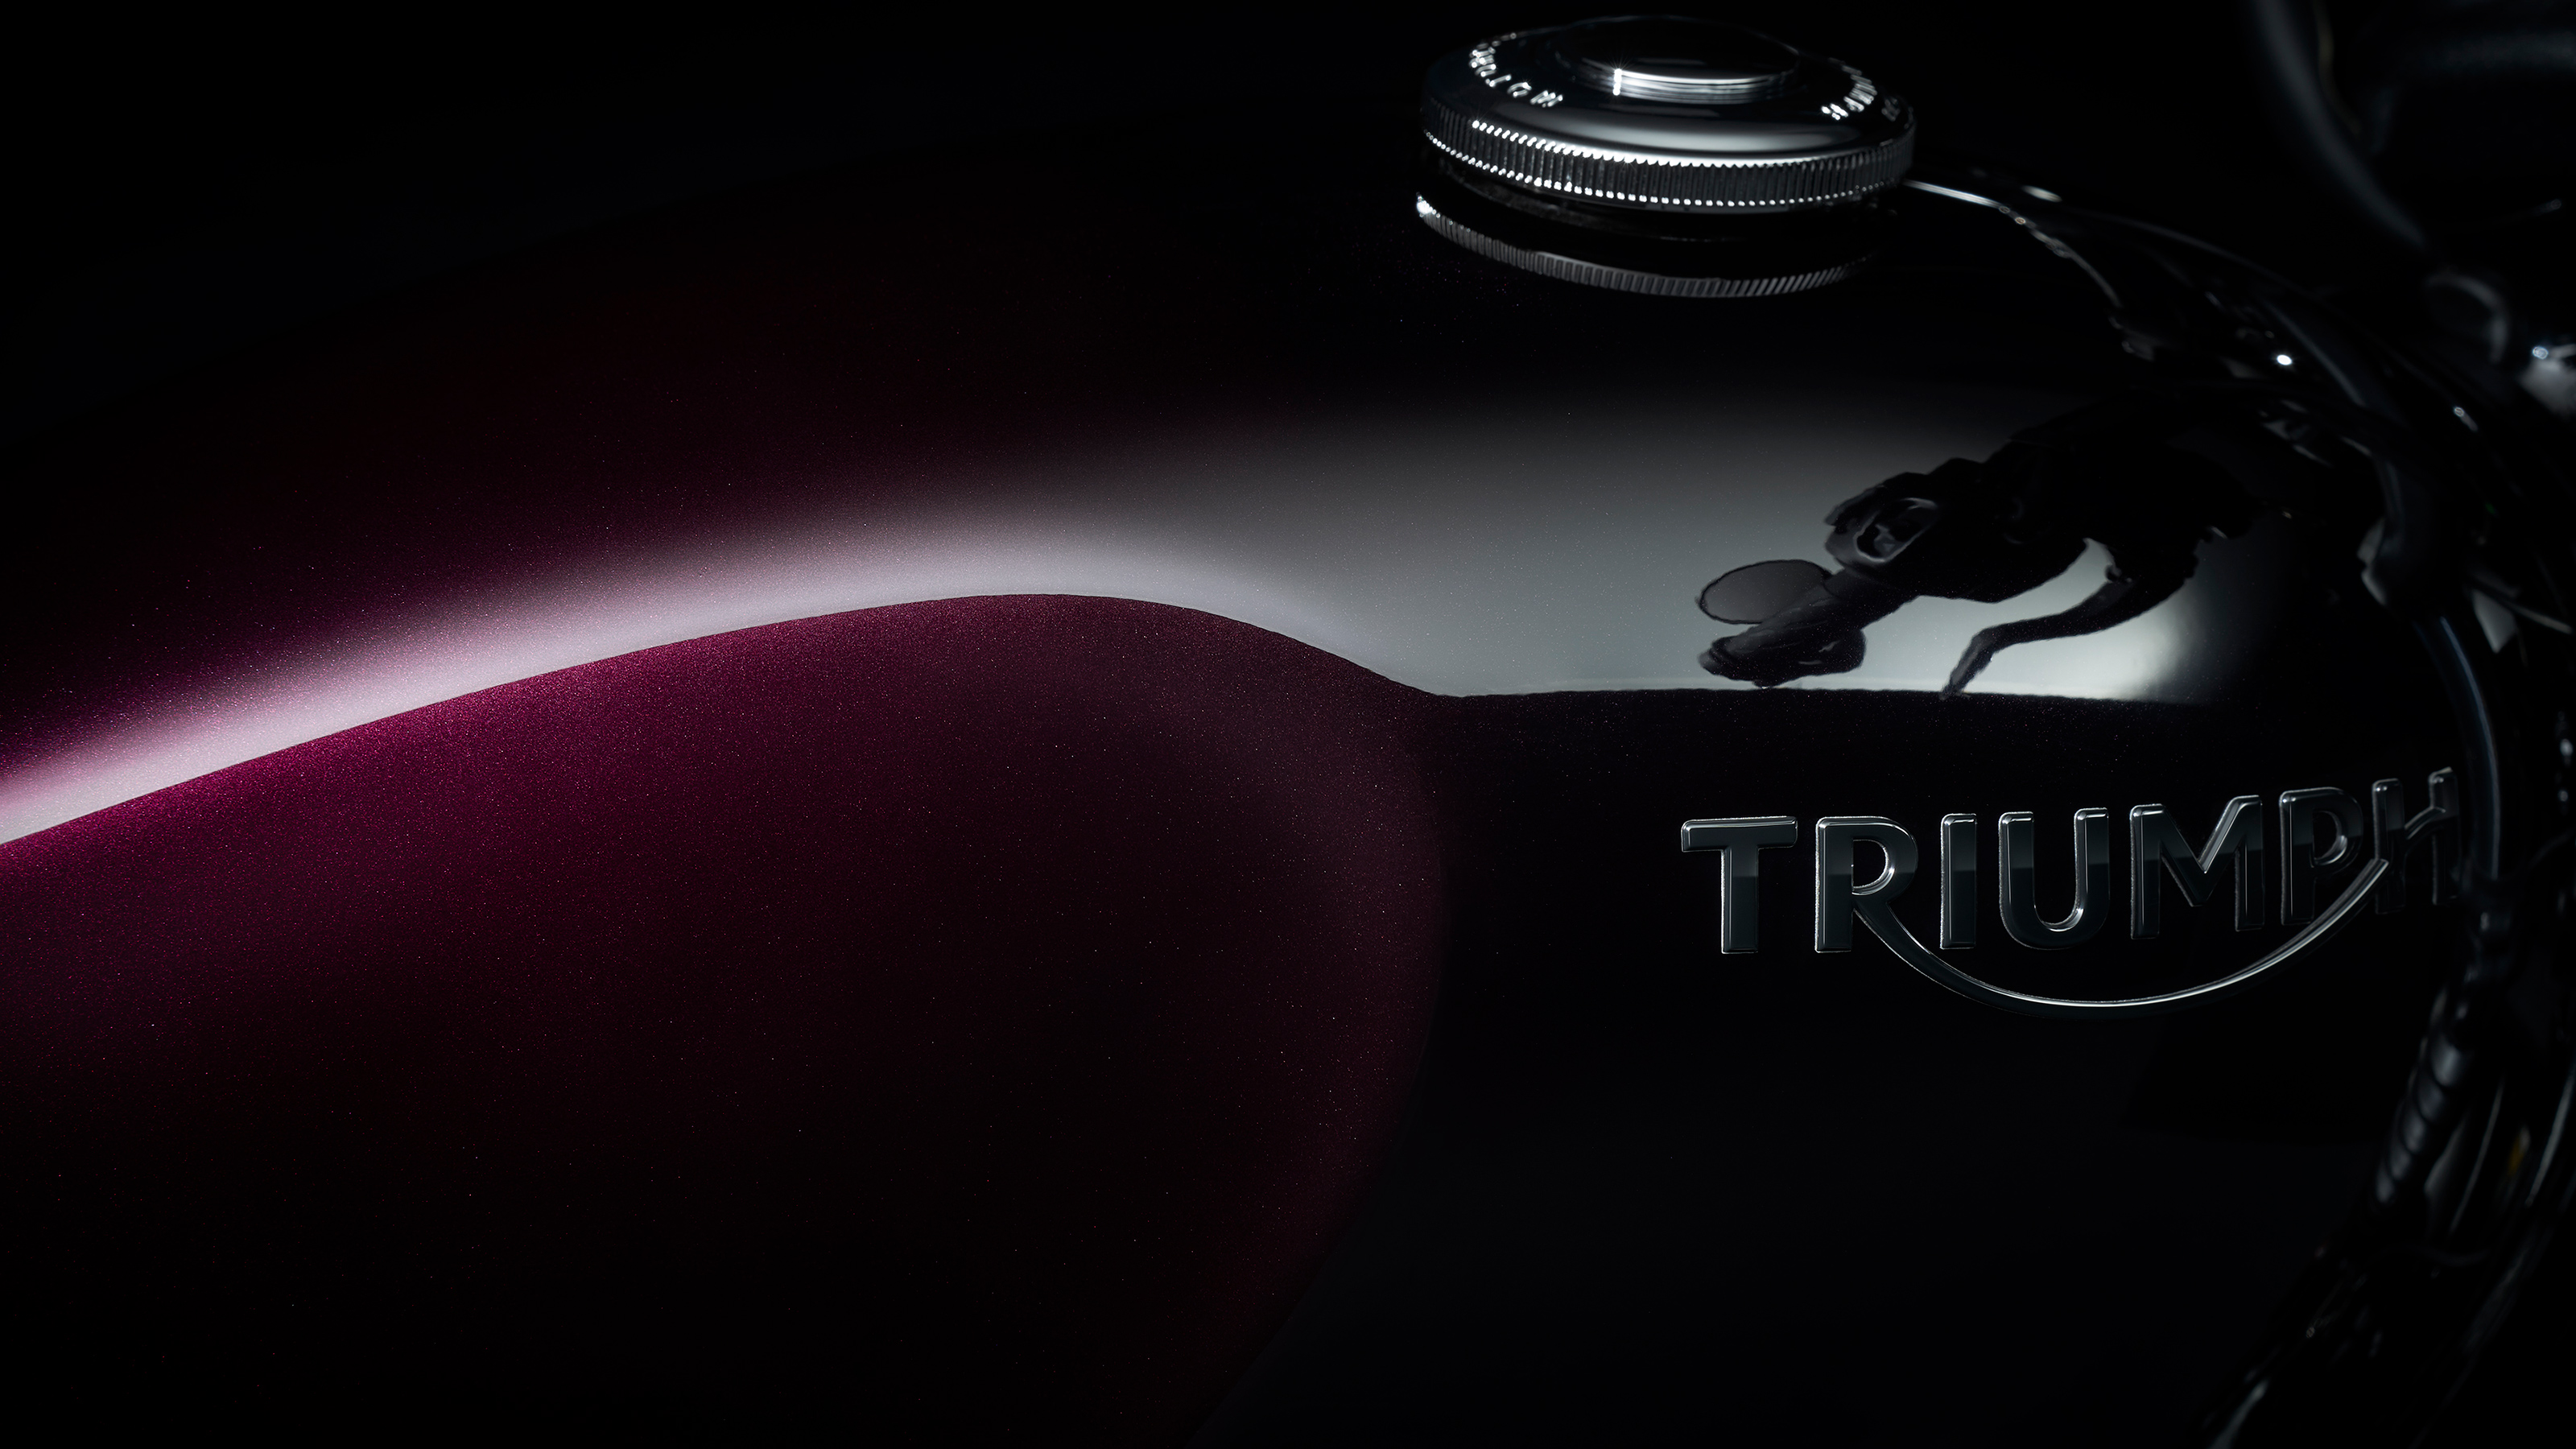 Triumph Motorcycles photoshoot